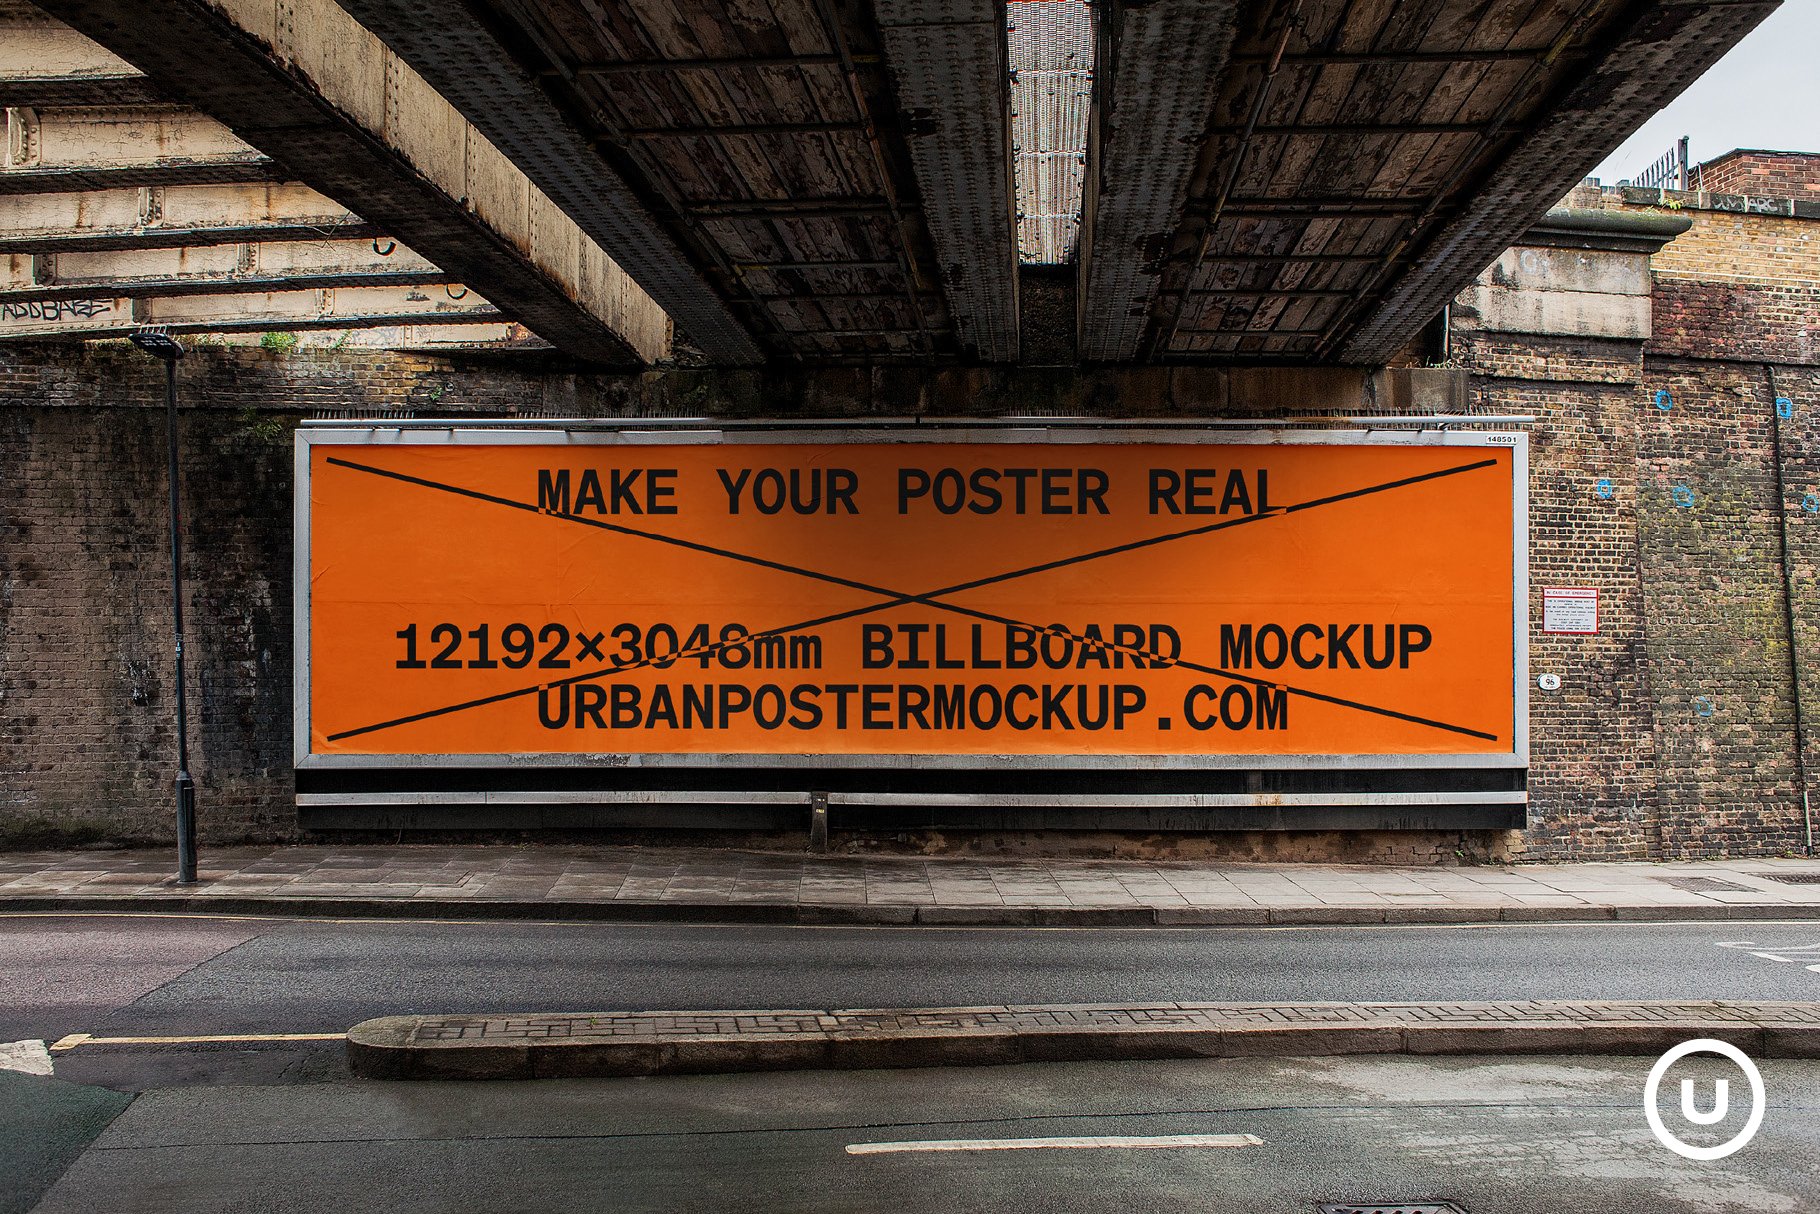 Billboard Poster Mockup cover image.